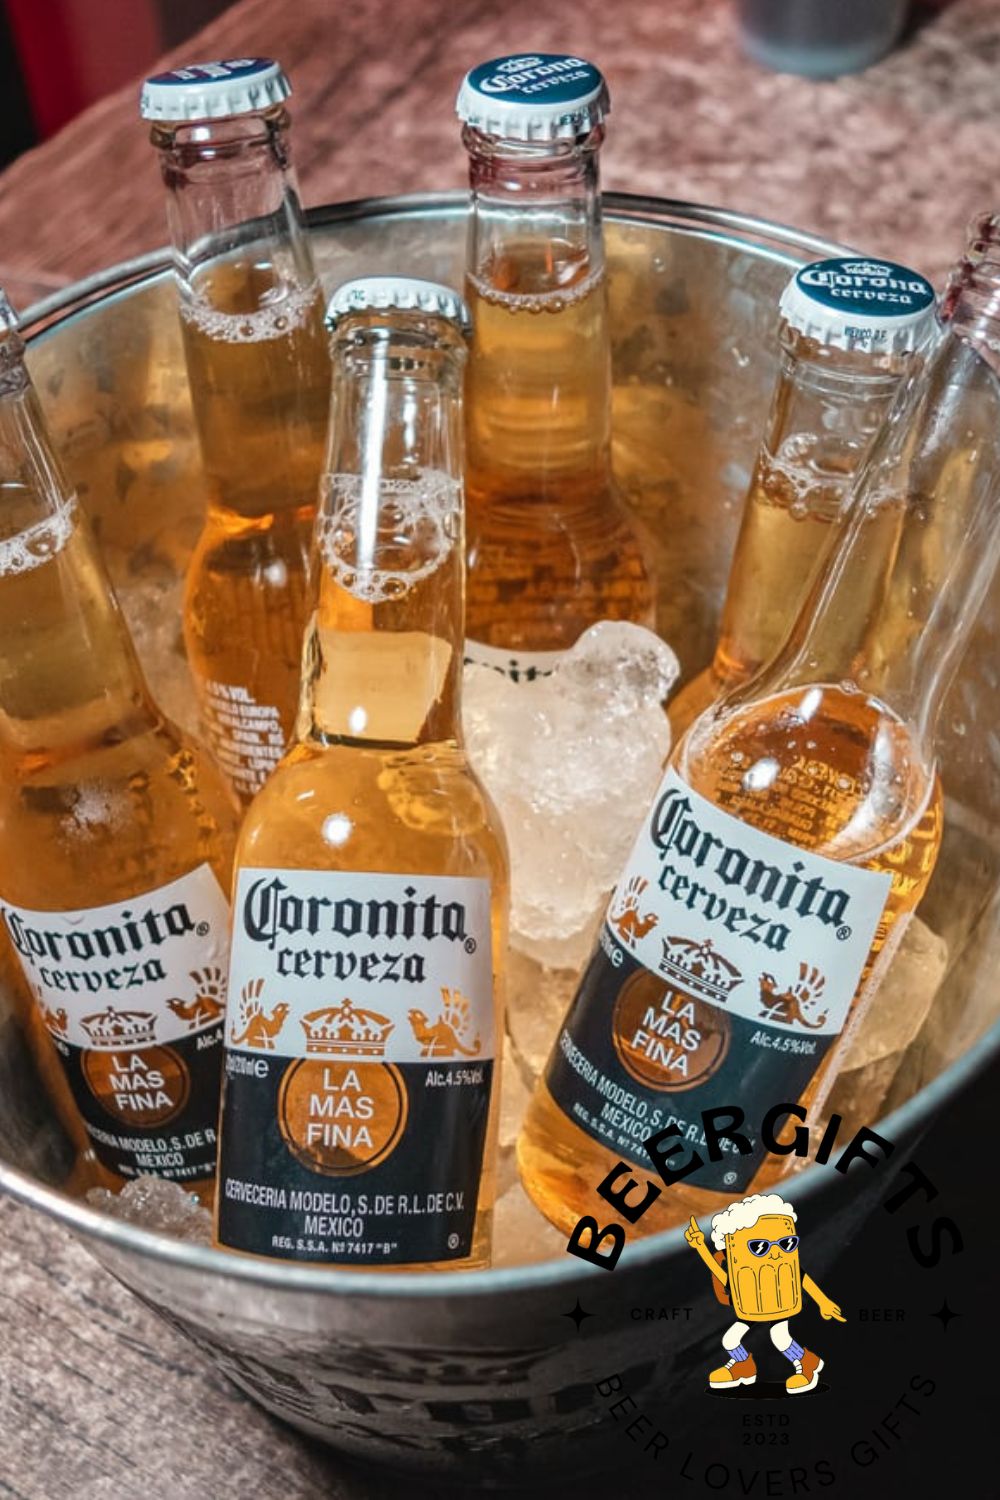 Coronita Vs Corona Beer What's the Difference3